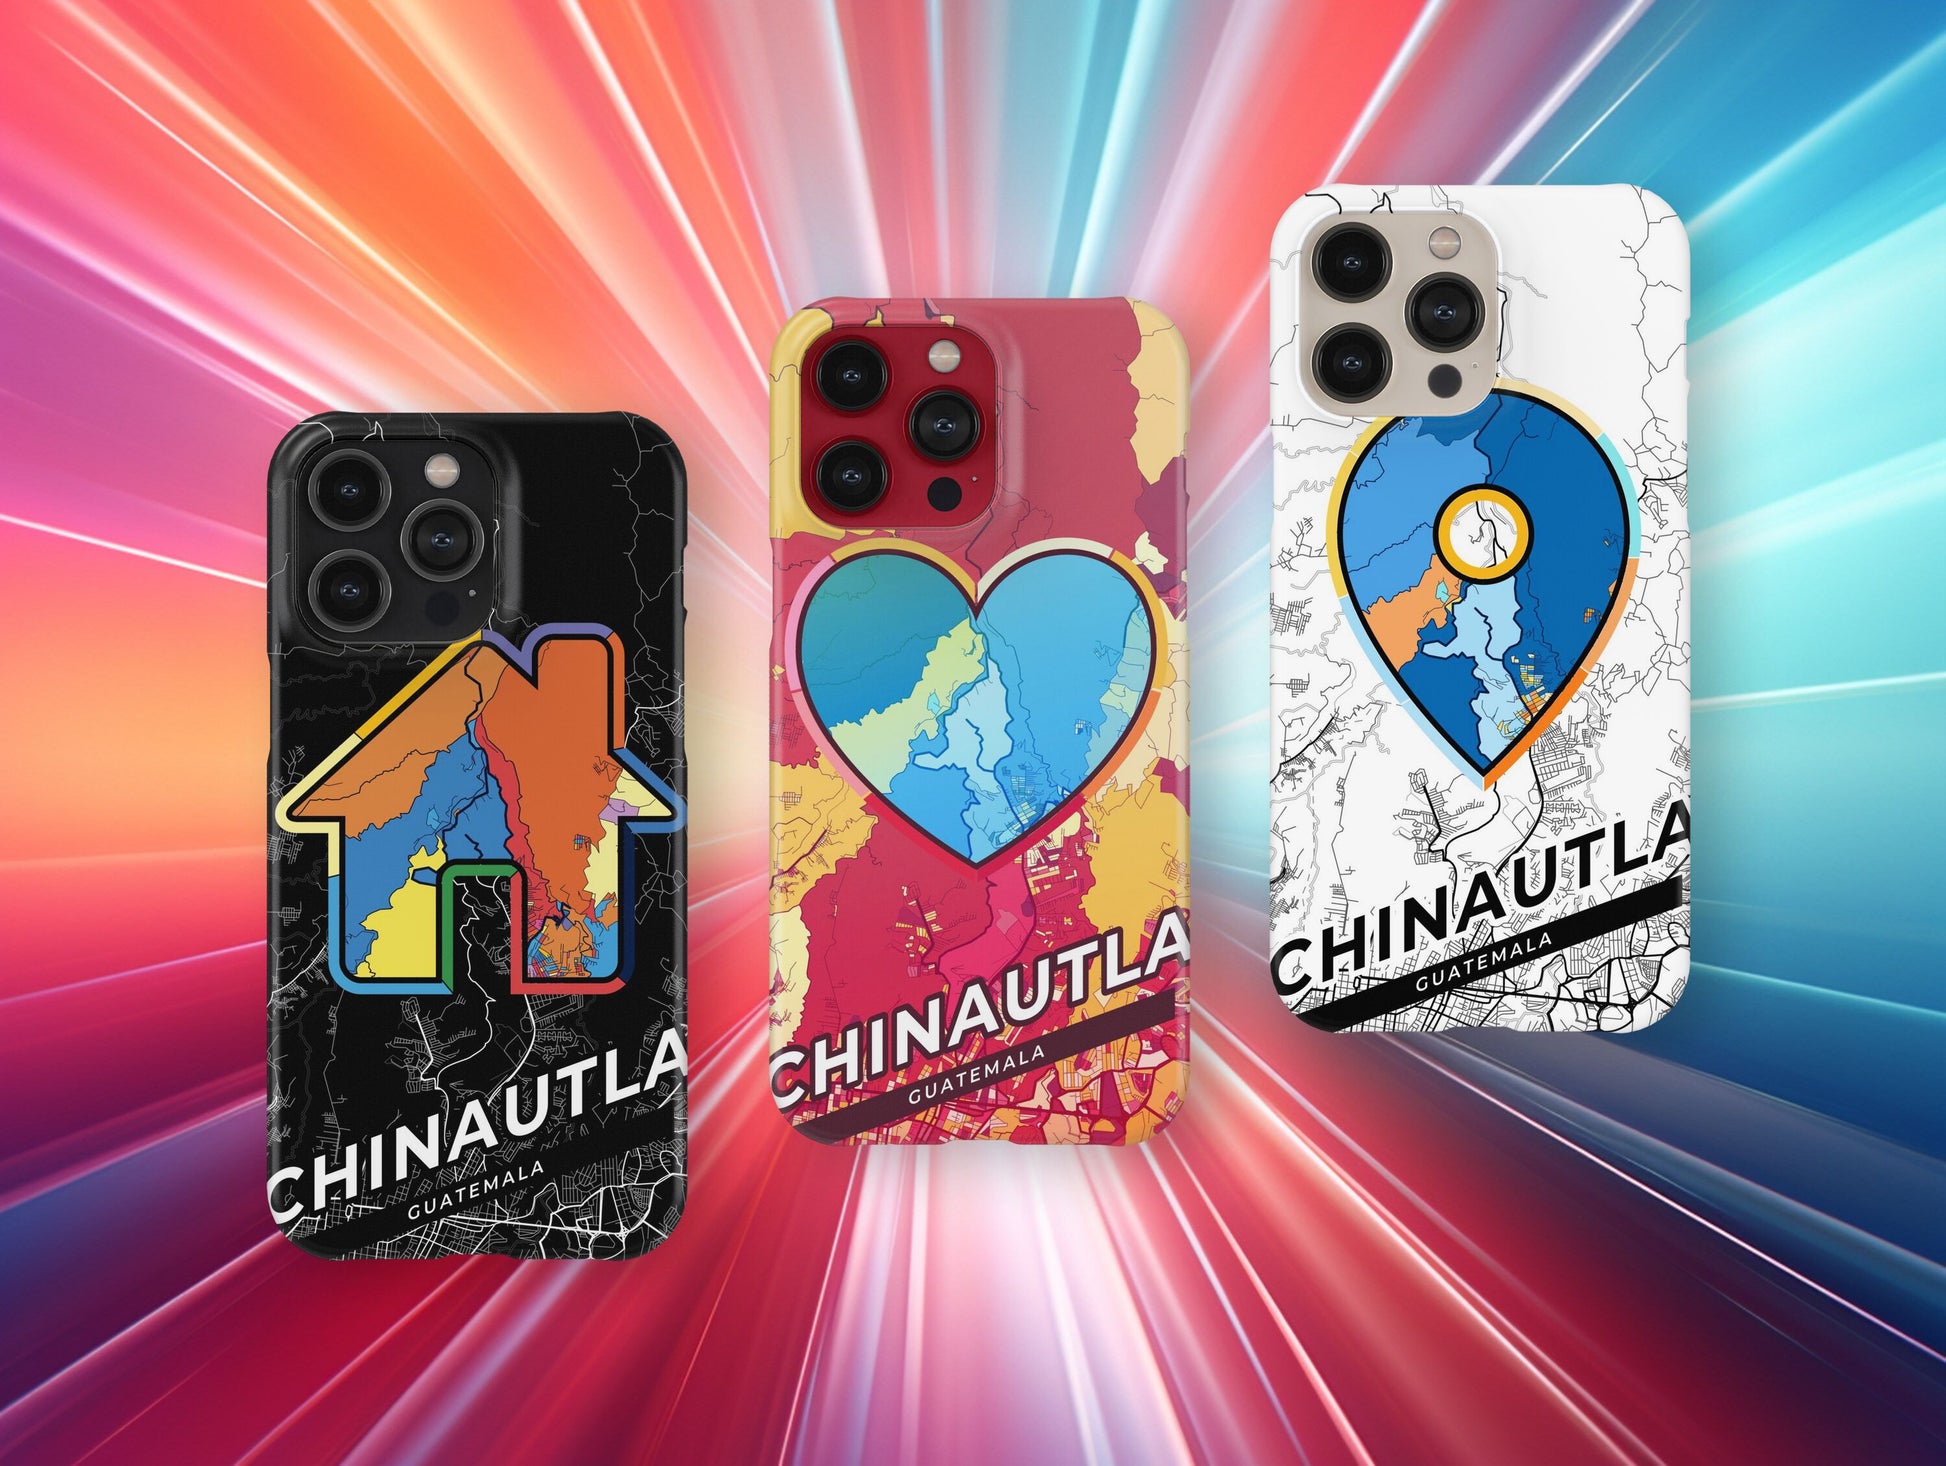 Chinautla Guatemala slim phone case with colorful icon. Birthday, wedding or housewarming gift. Couple match cases.